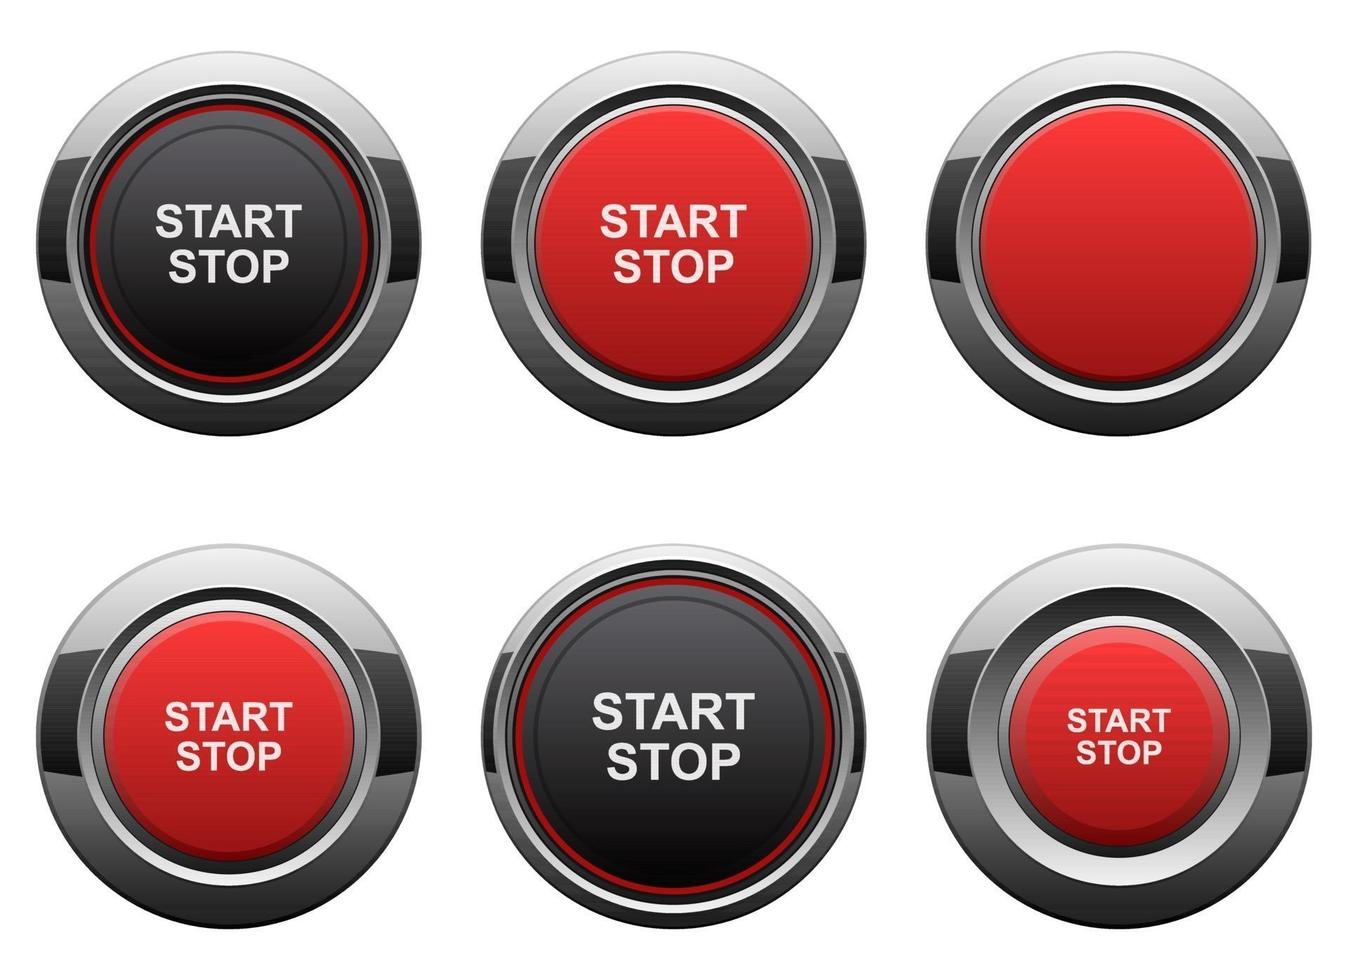 Start engine button vector design illustration set isolated on white background